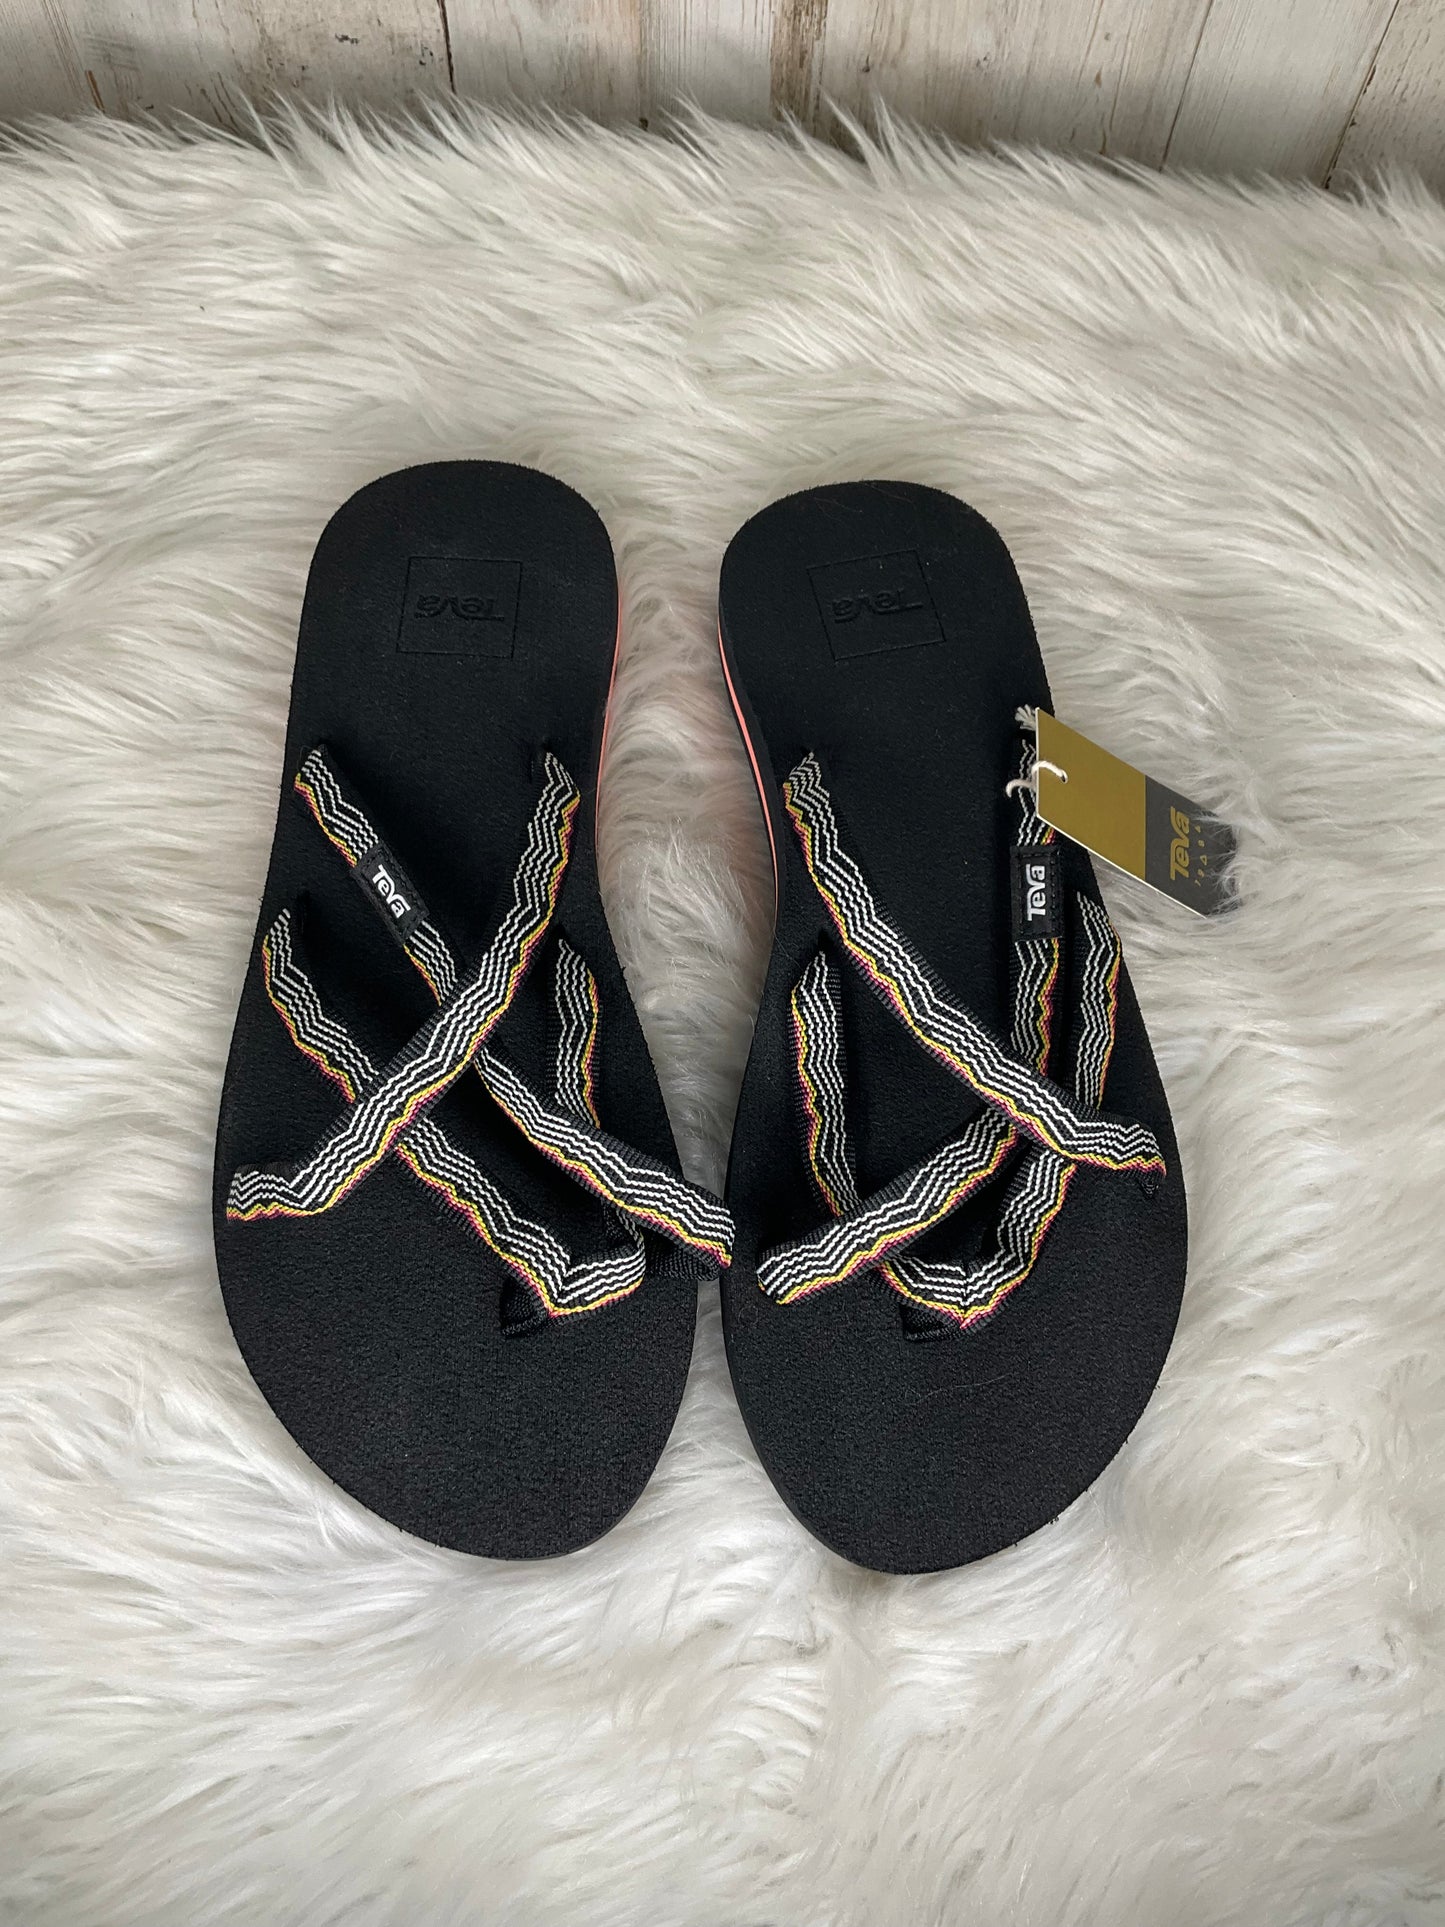 Sandals Flip Flops By Teva  Size: 7